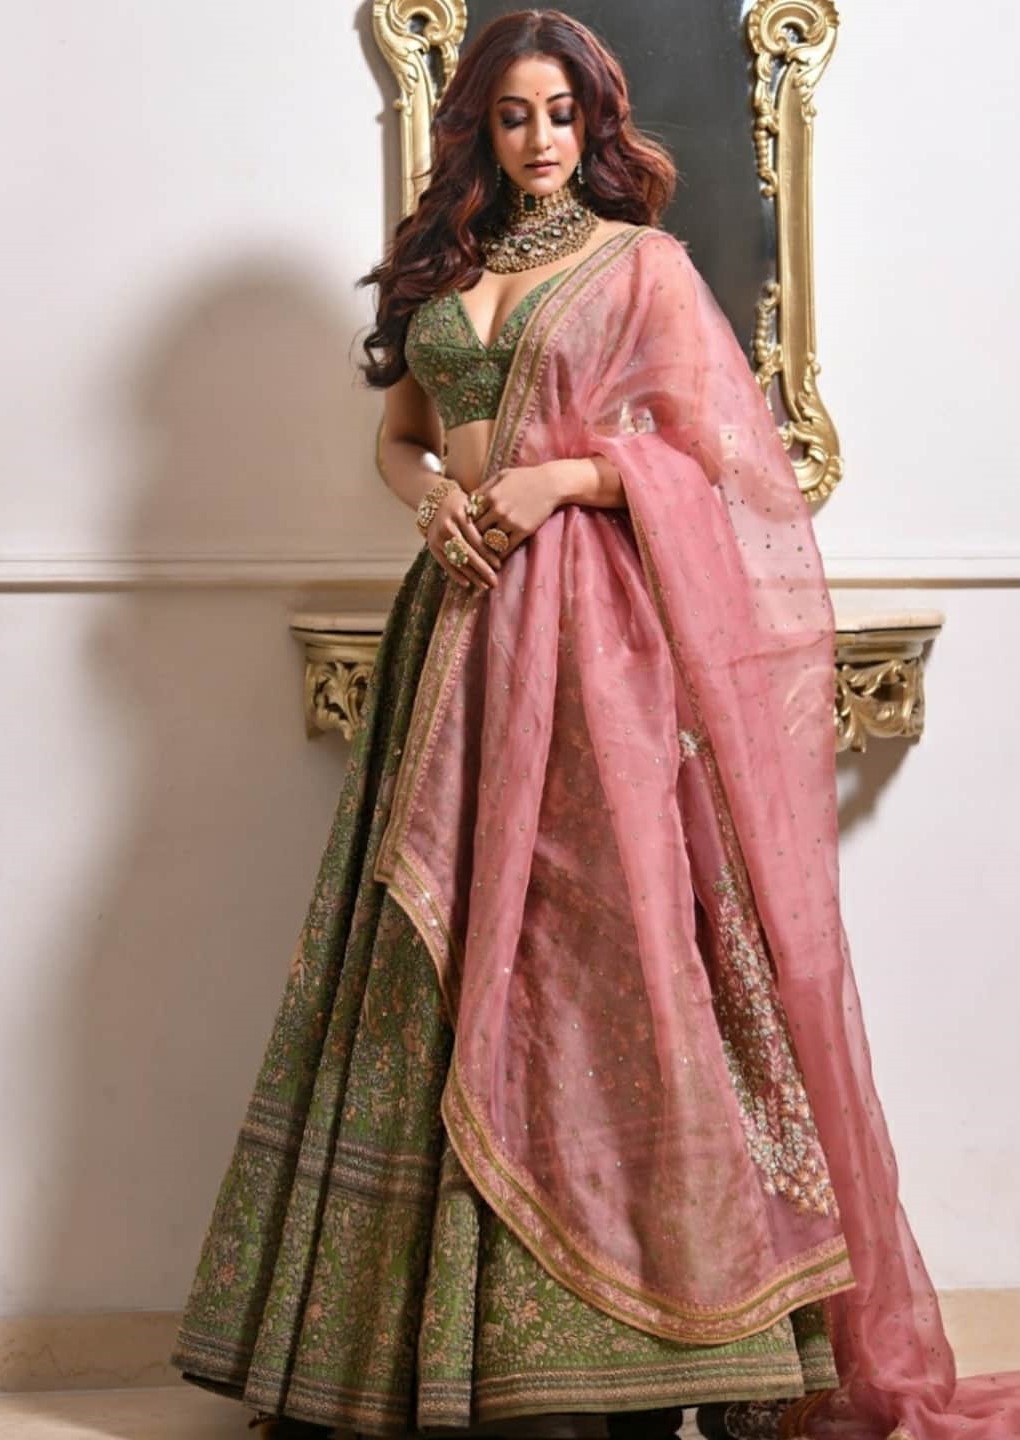 Parineeta Fame Raima Sen In Olive Green Embroidered Lehenga With Pink Dupatta - Stunning Outfits & Looks :Bollywood Fashion